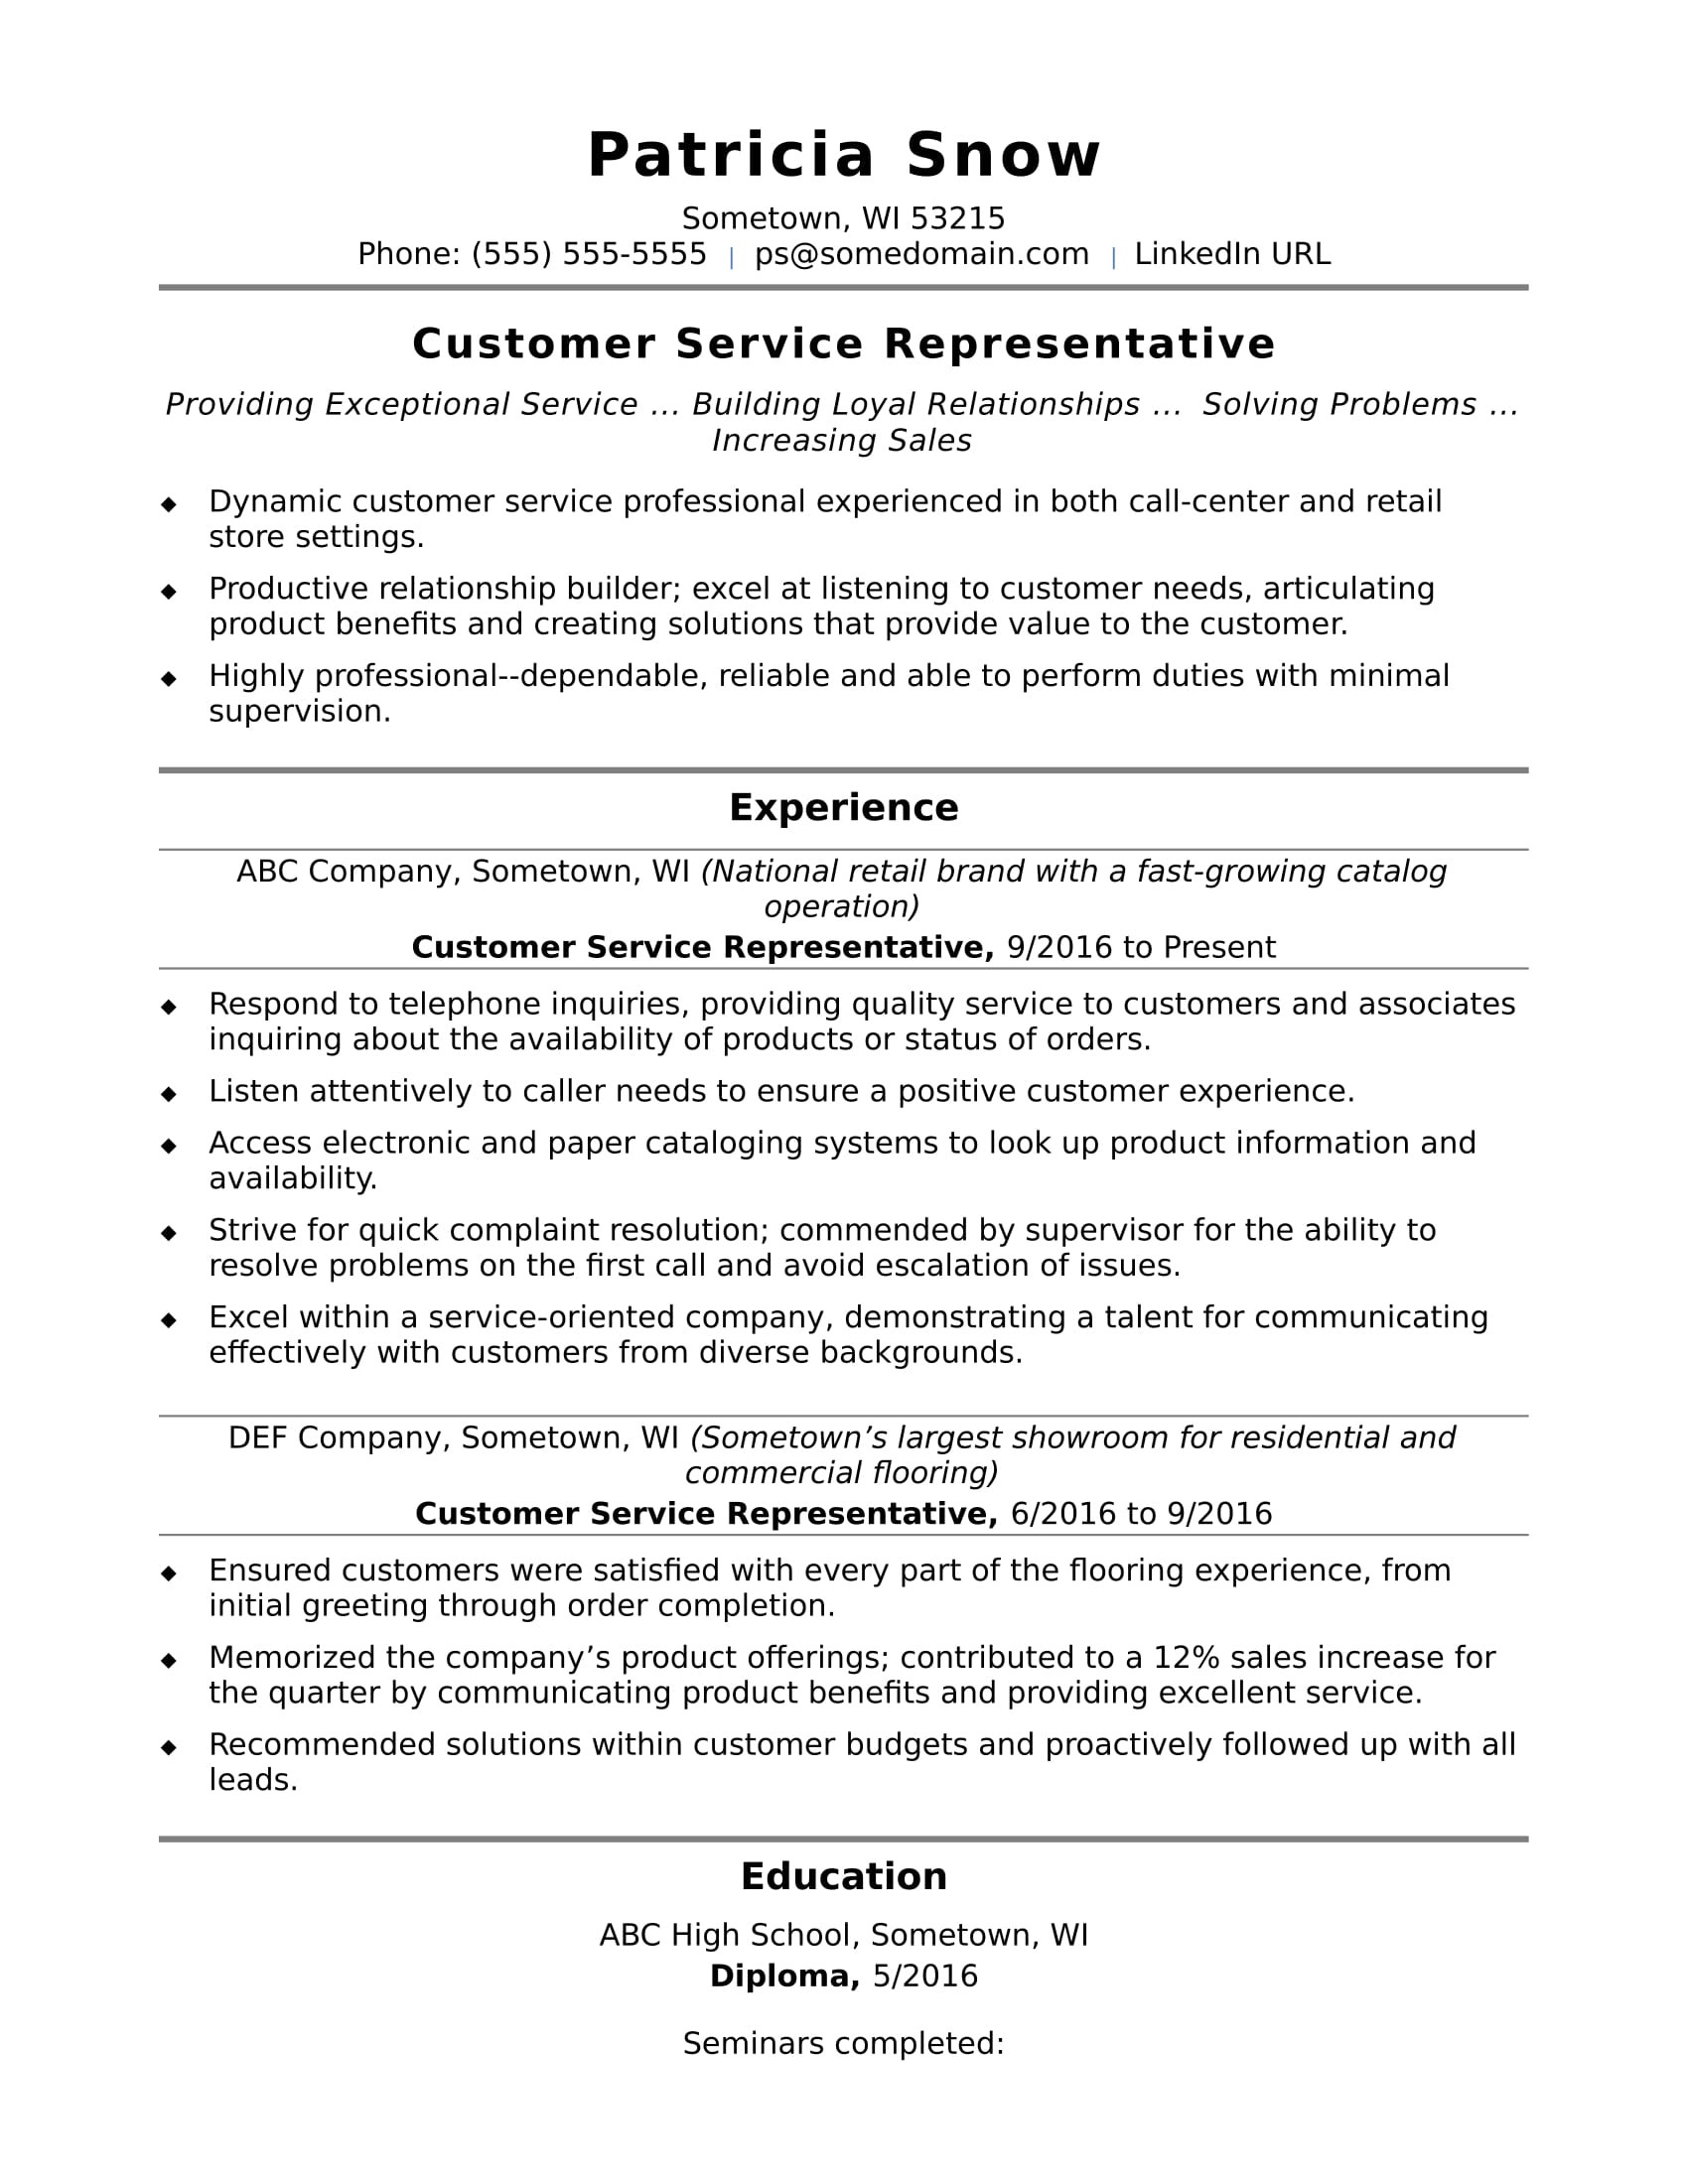 Sample Resume Entry Level Sales Position Entry-level Customer Service Resume Sample Monster.com